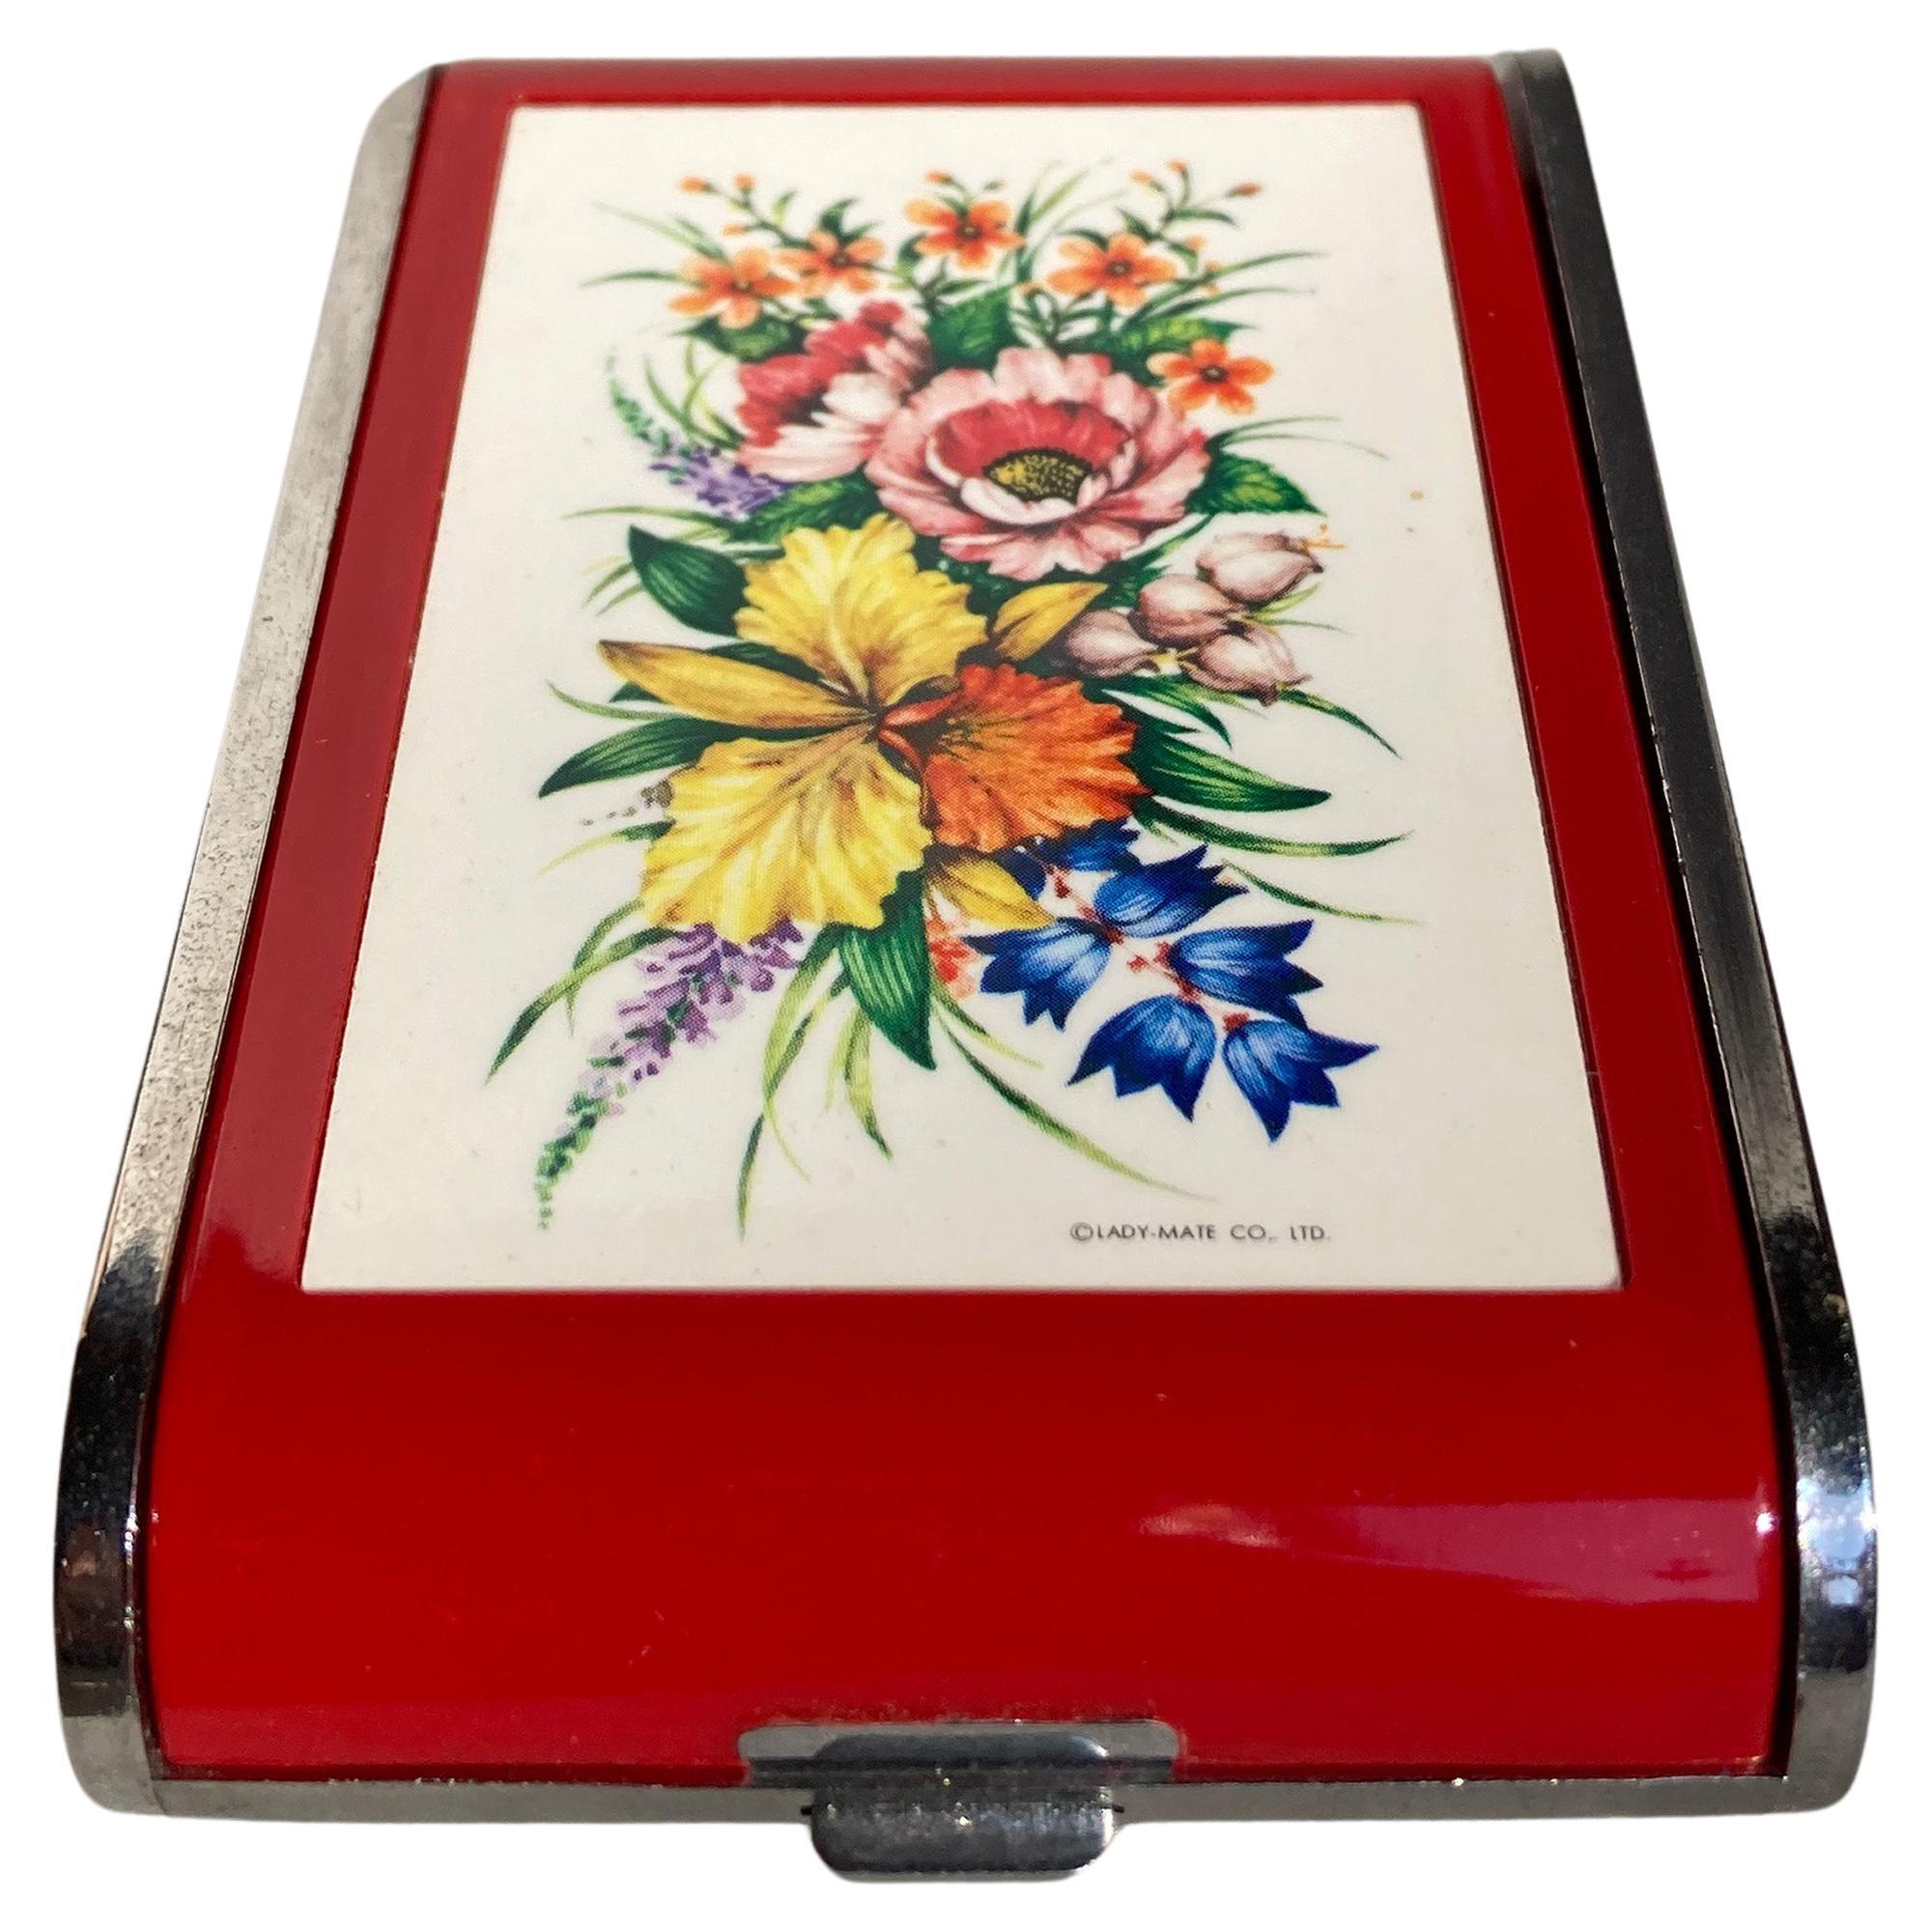 1970s Cigarette Case Musical Powder Compact Japan Clockwork Carillon Beauty Box